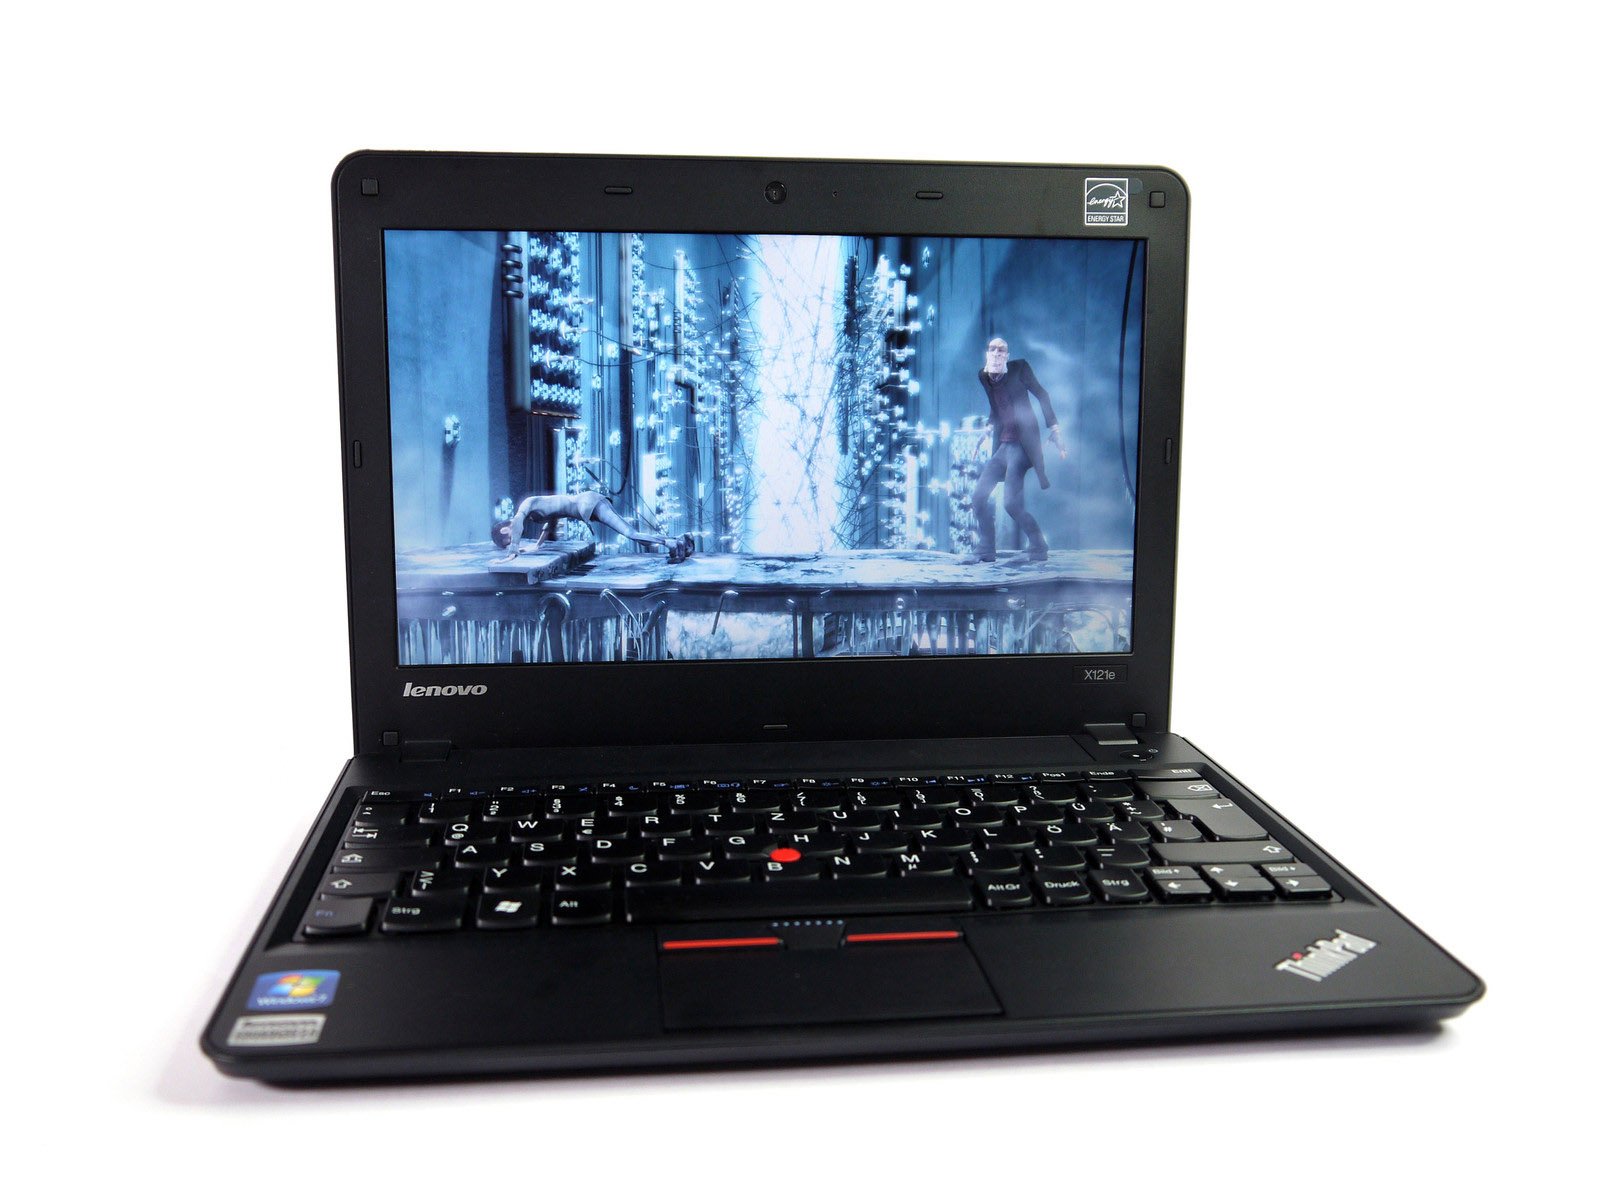 Laptop LENOVO ThinkPad x121e, Intel Core i3-2367M 1.40GHz, 4GB DDR3, 320GB SATA, Webcam, 11.6 Inch